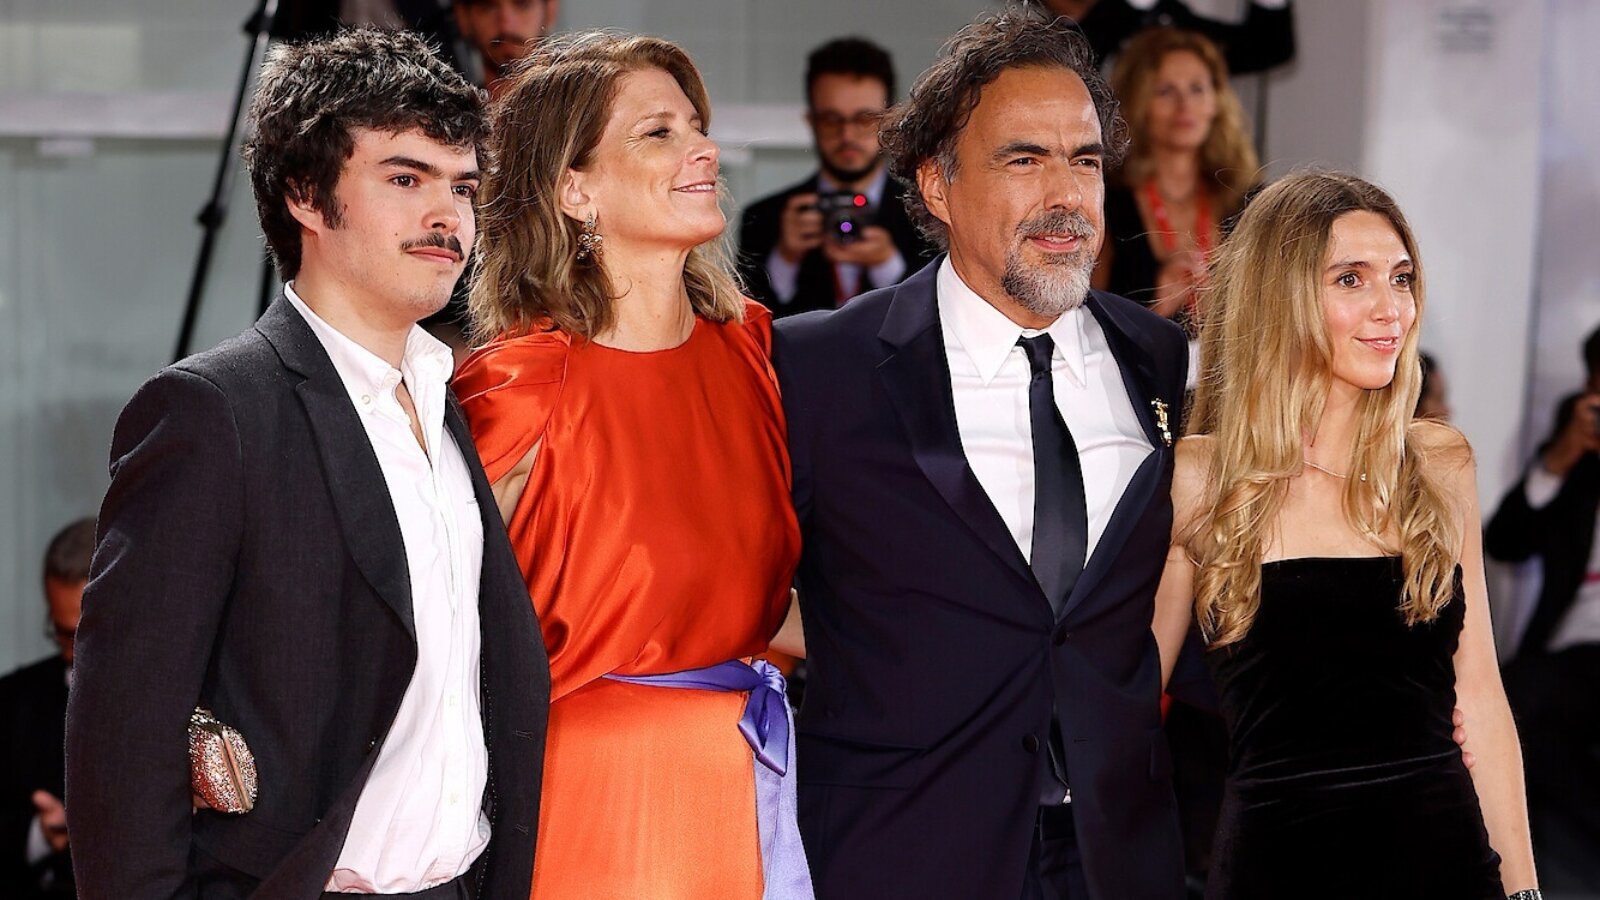 Der Regisseur mit seiner Familie auf der Premiere von BARDO: (L-R) Eliseo Iñárritu, Maria Eladia Hagerman, Regisseur Alejandro González Iñárritu undMaria Eladia Iñárritu.